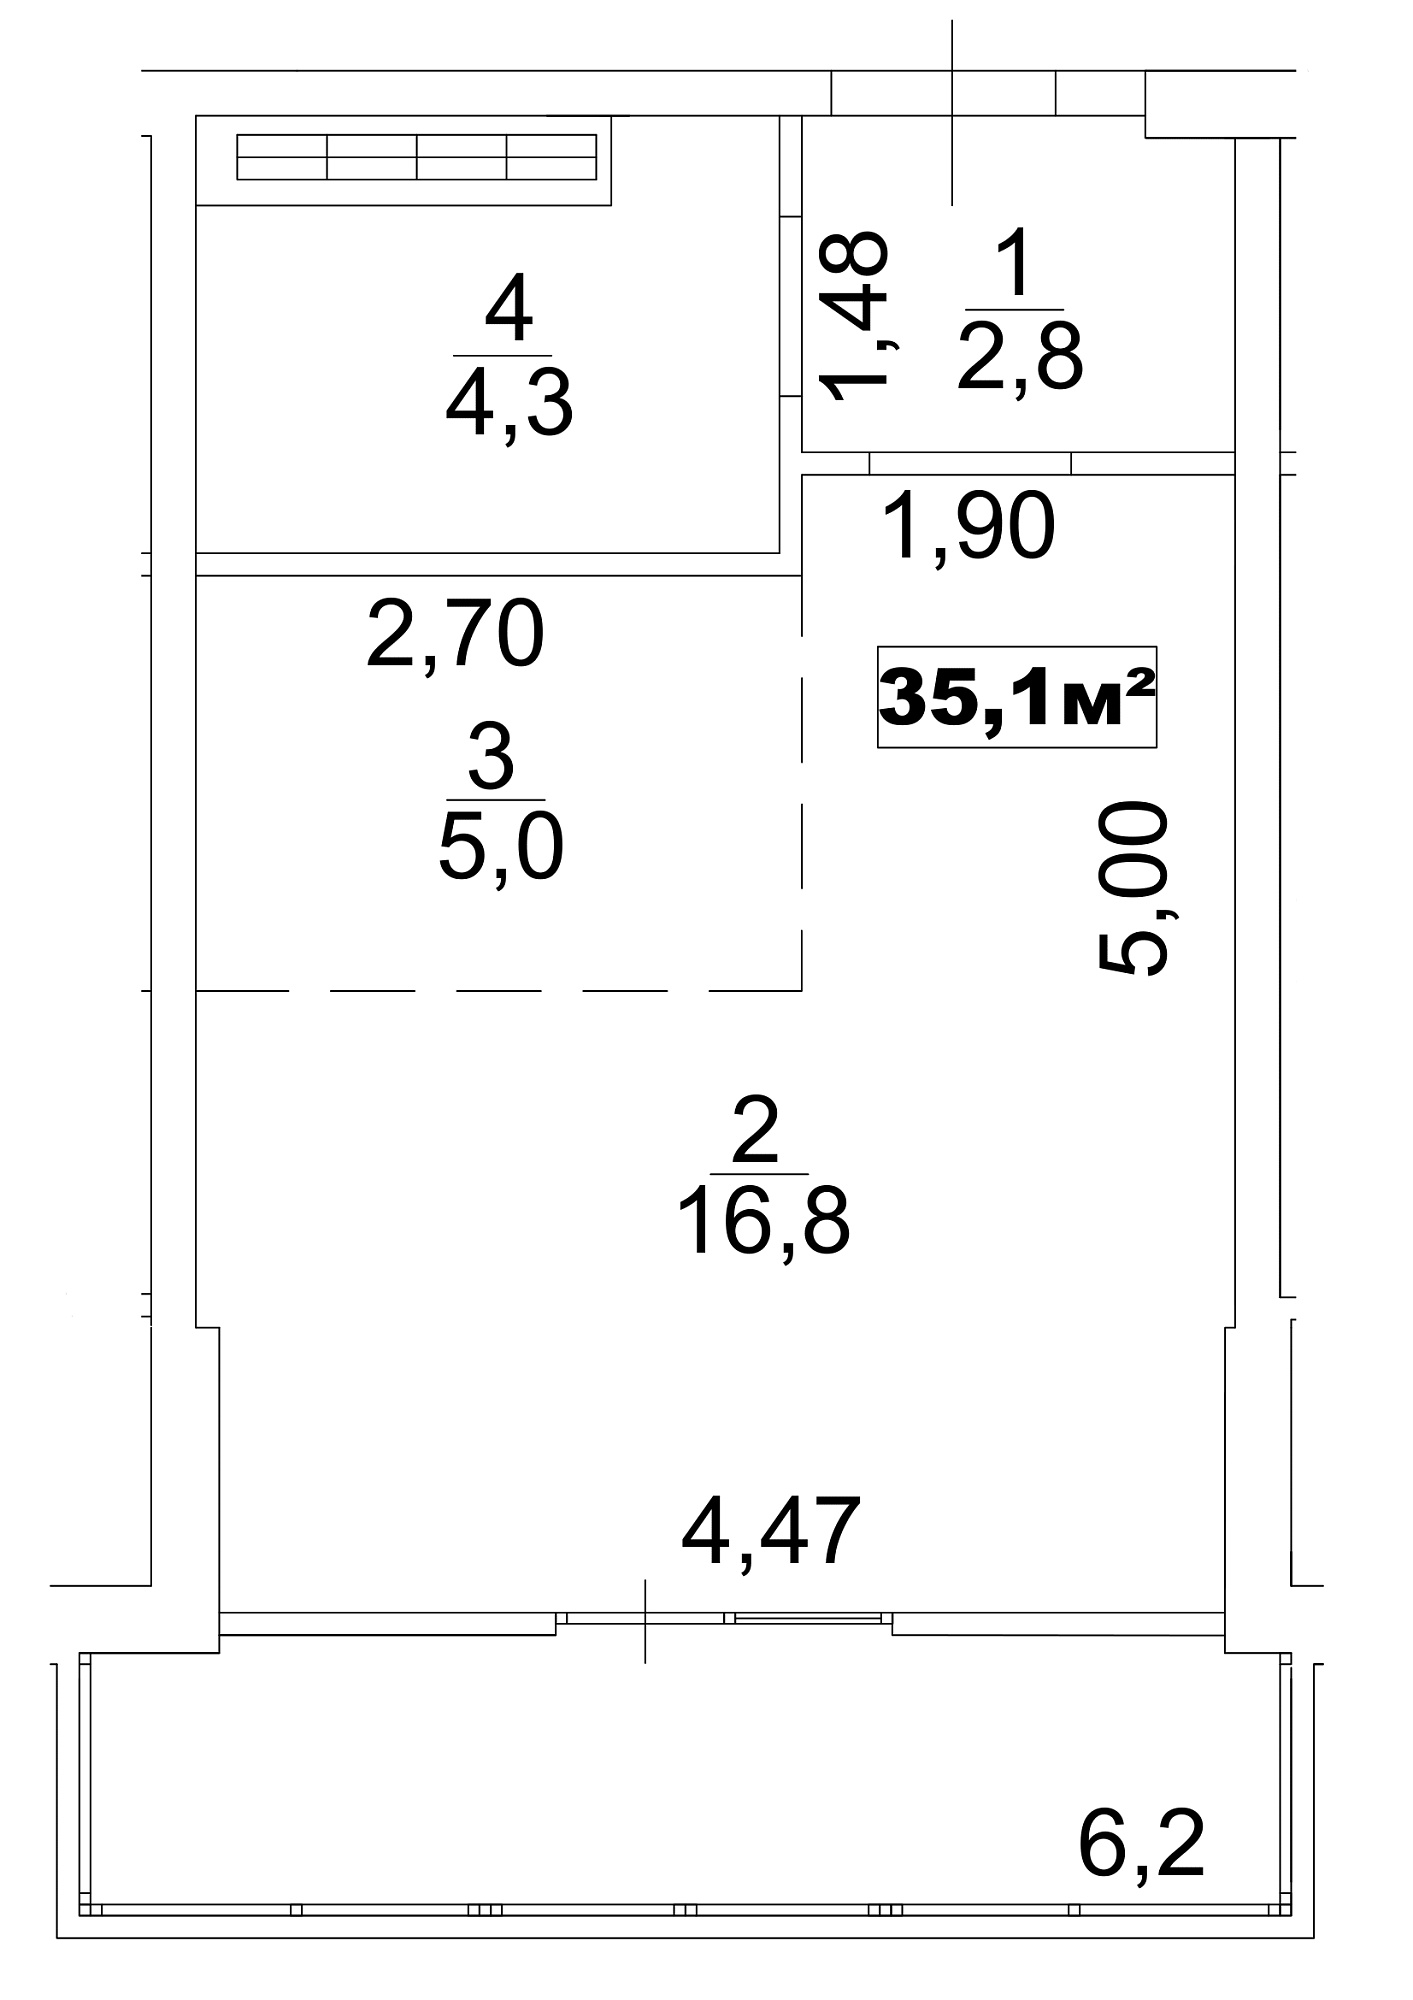 Planning Smart flats area 35.1m2, AB-13-02/0007б.